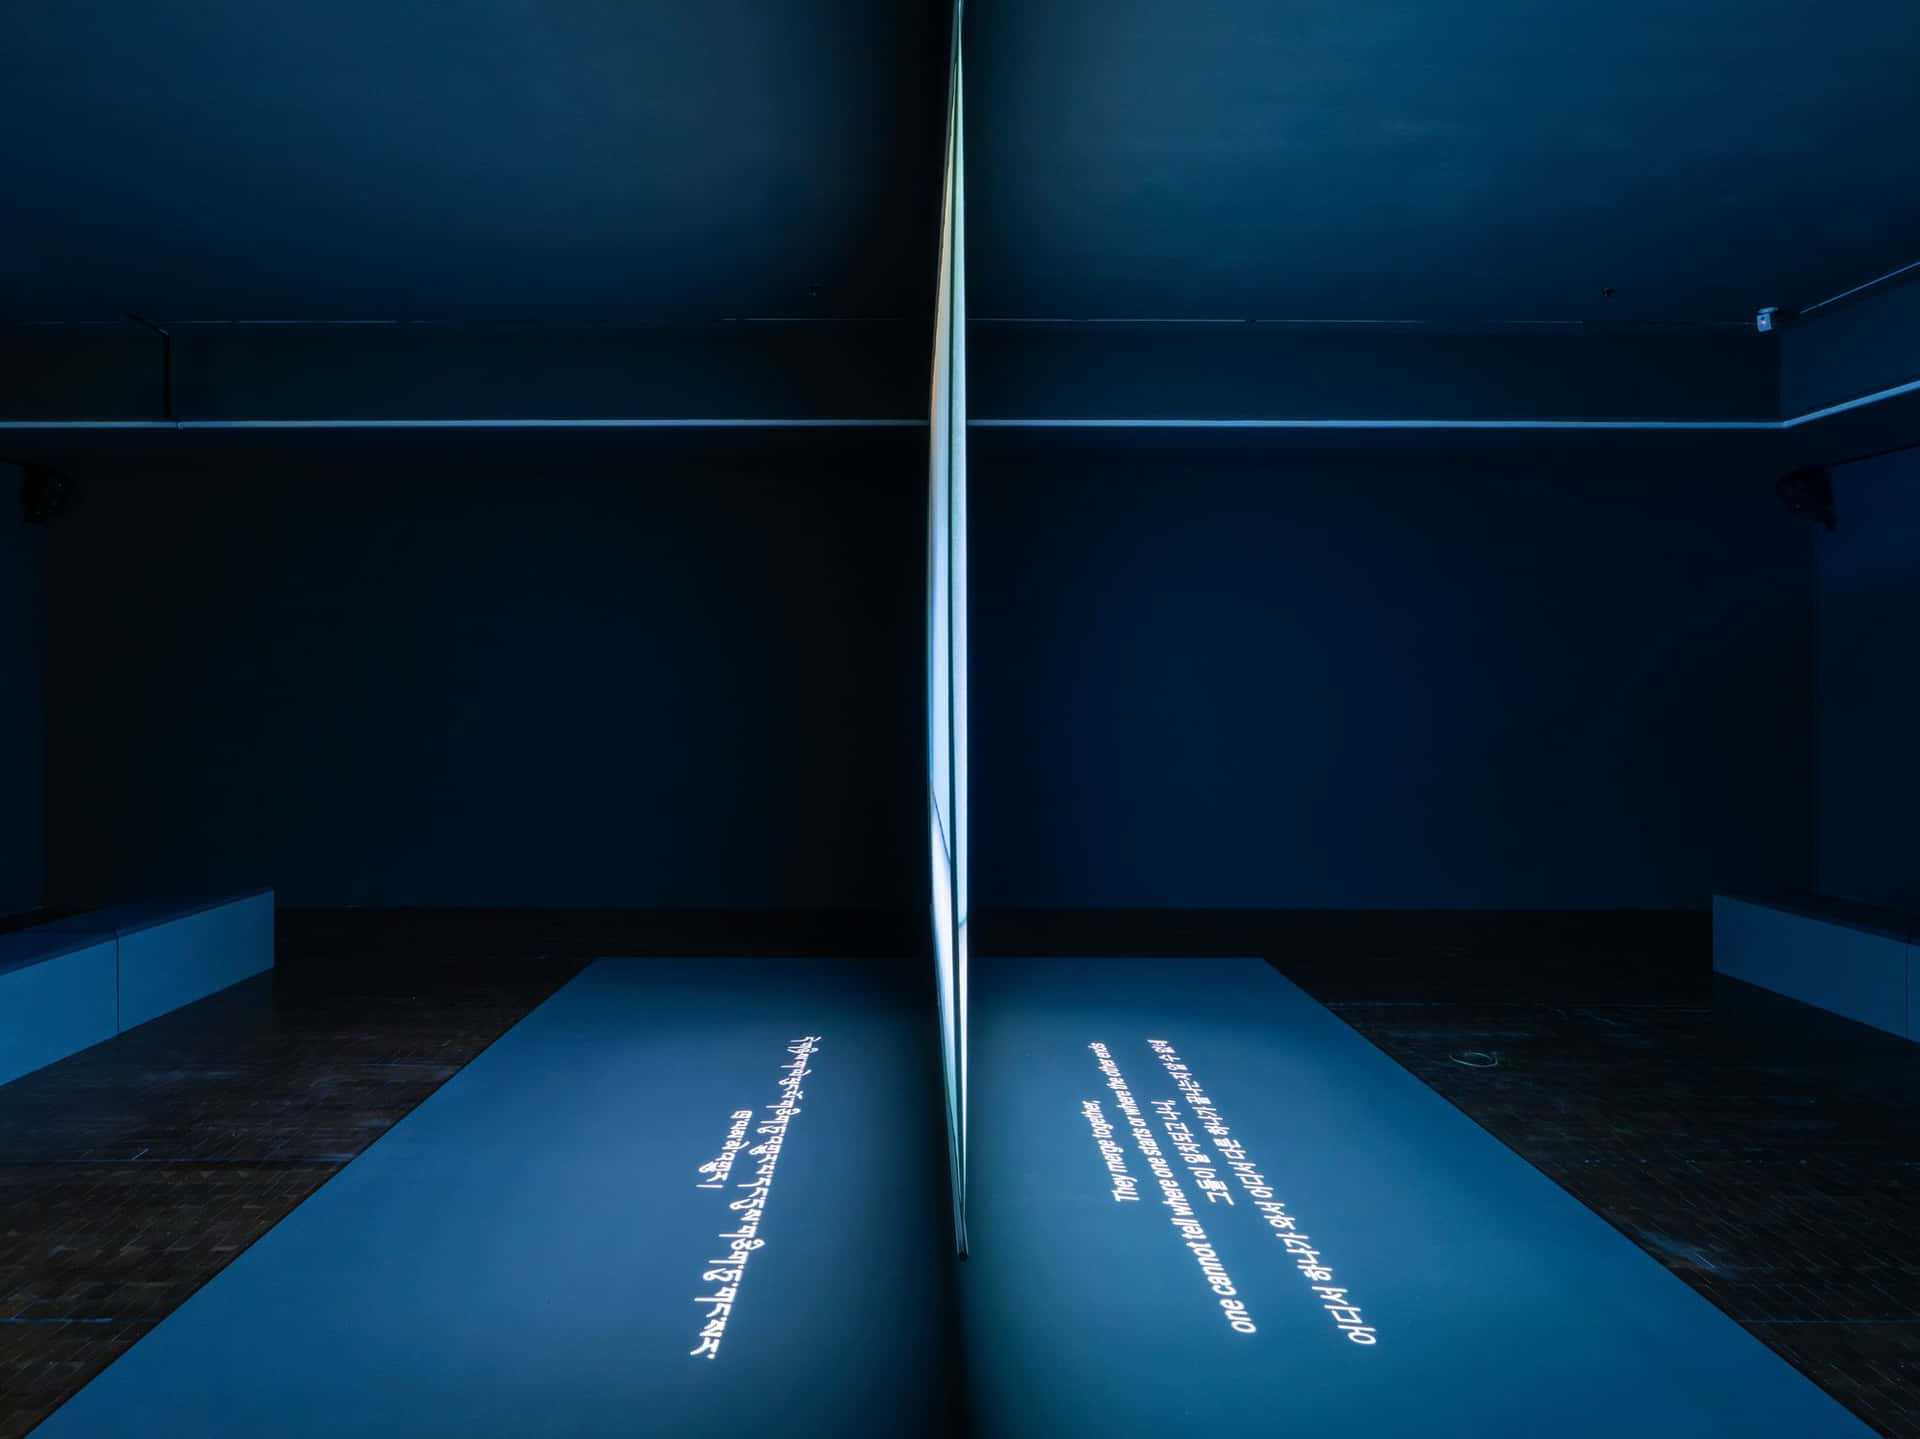 Abstract Art Exhibit Blue Room Wallpaper